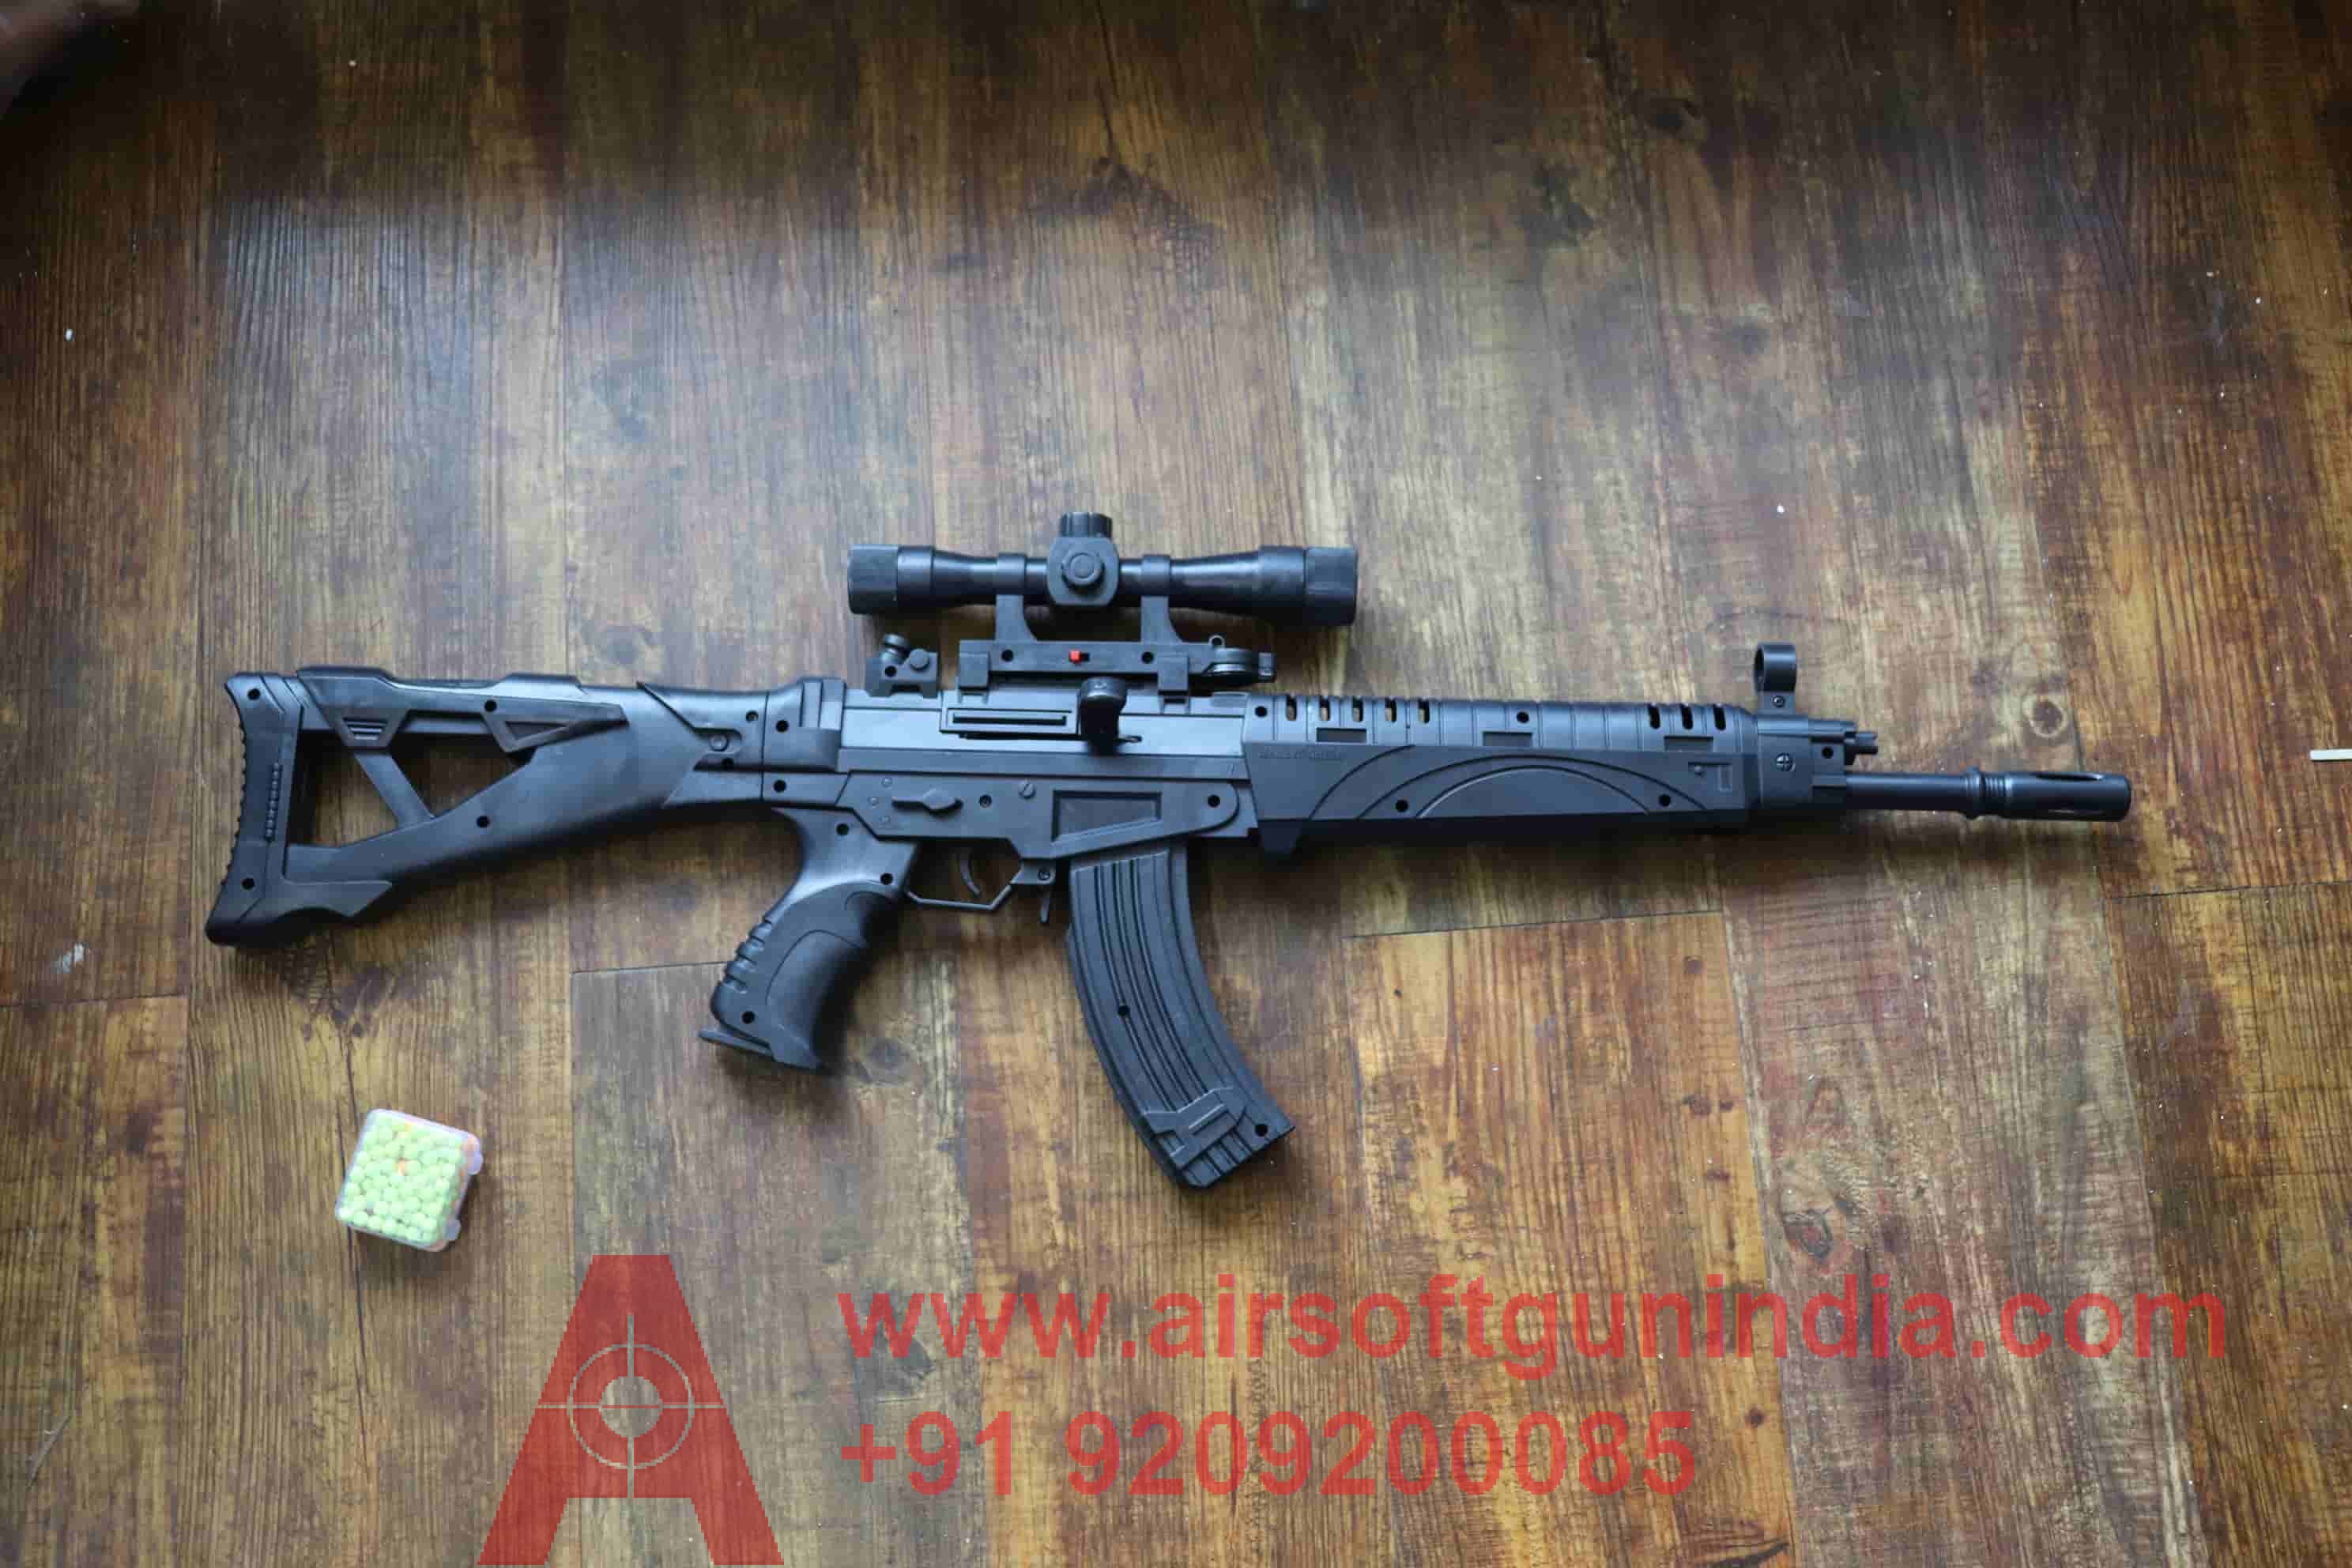 Assault Rifle 989 By  Airsoft Gun India